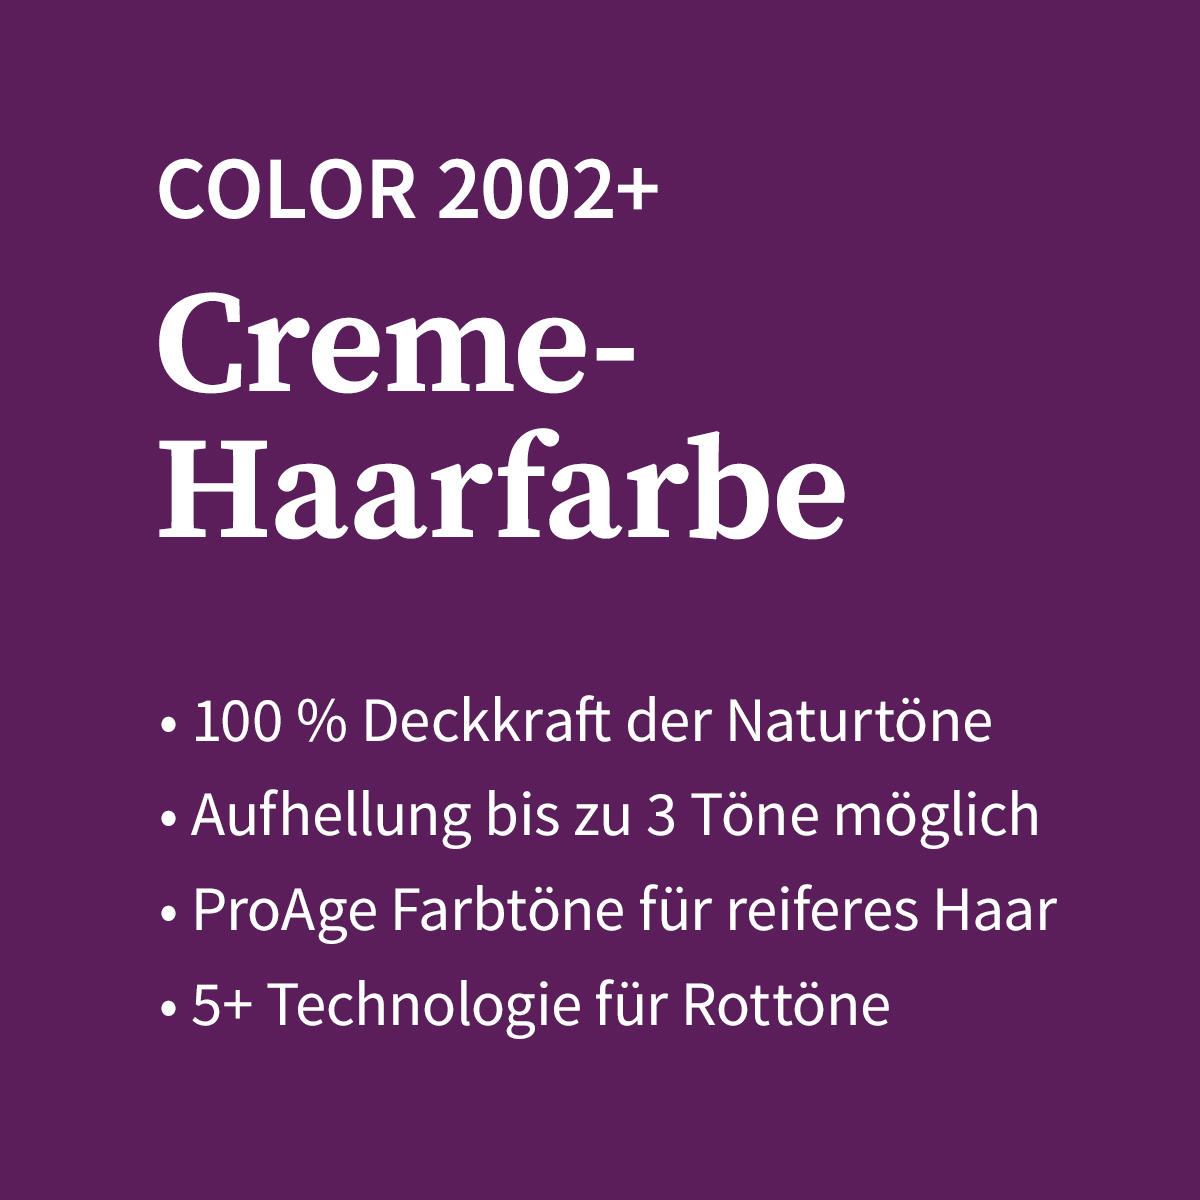 Basler Color 2002+ Cremehaarfarbe 8/2 hellblond matt, Tube 60 ml - 4